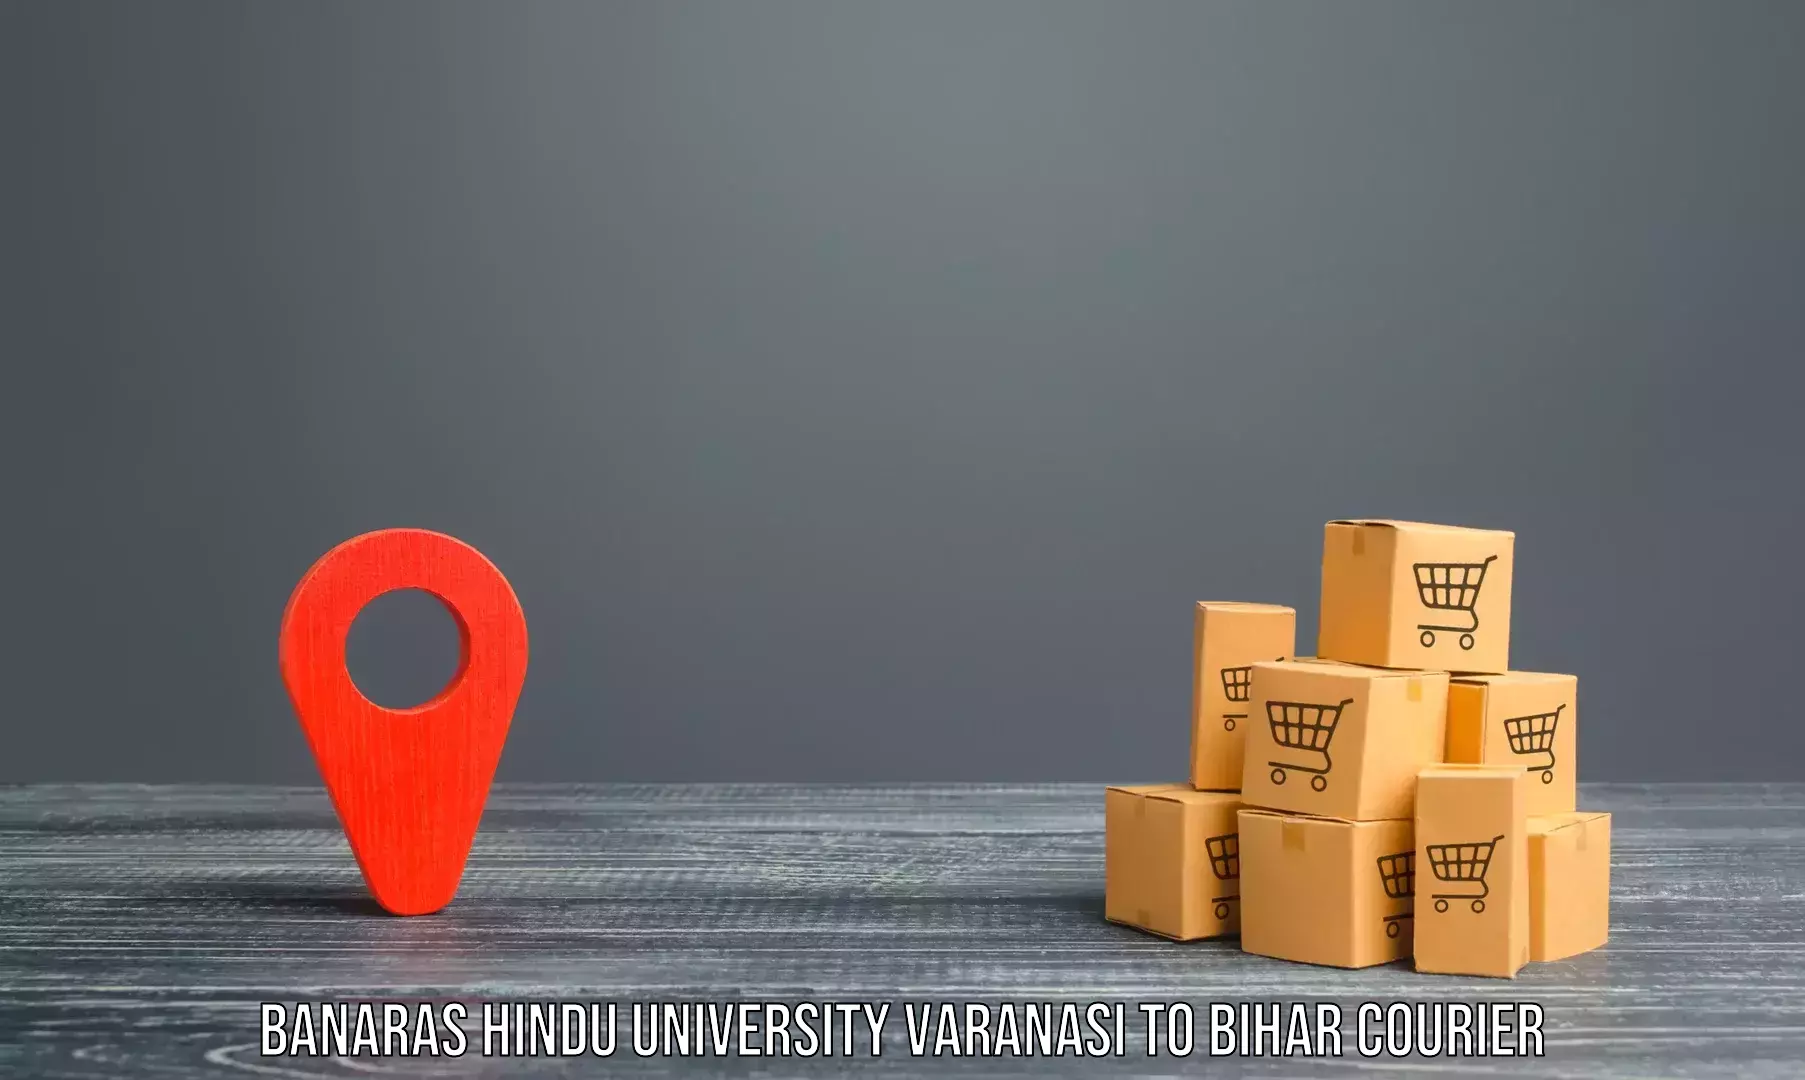 Quality relocation assistance Banaras Hindu University Varanasi to Sultanganj